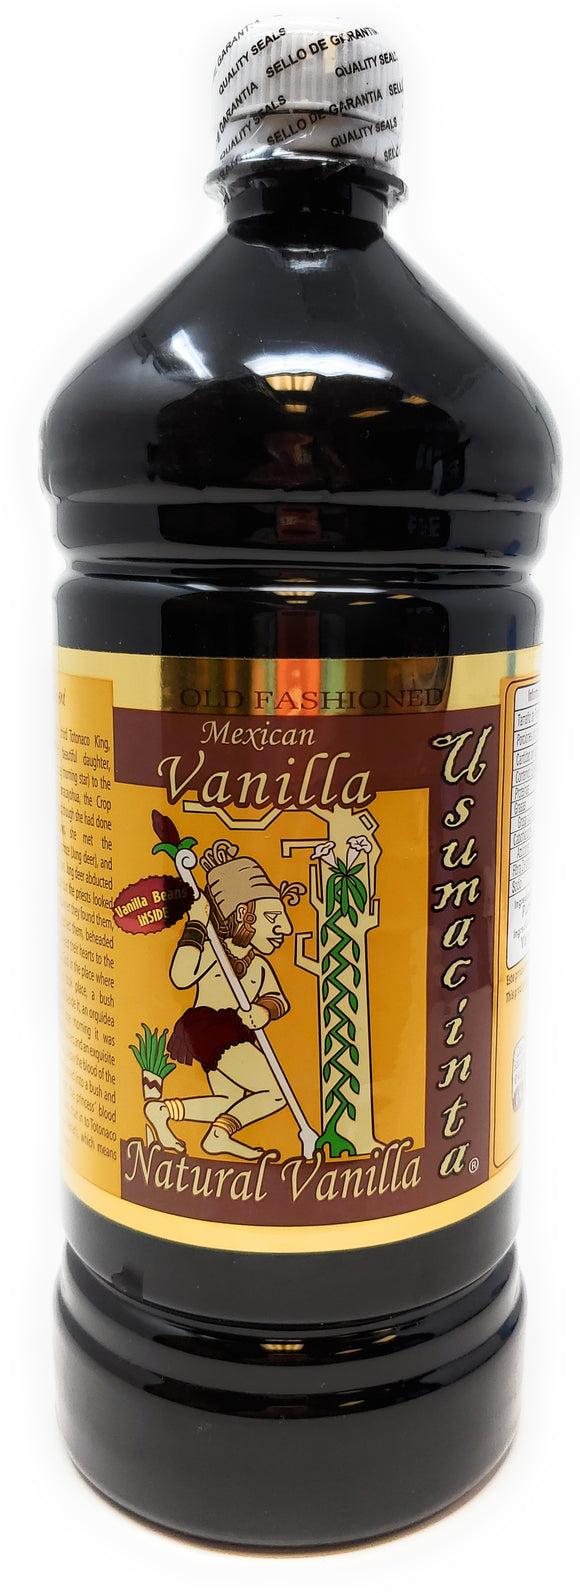 Usumacinta Pure Mexican Vanilla 33.8 Ounces, Amber